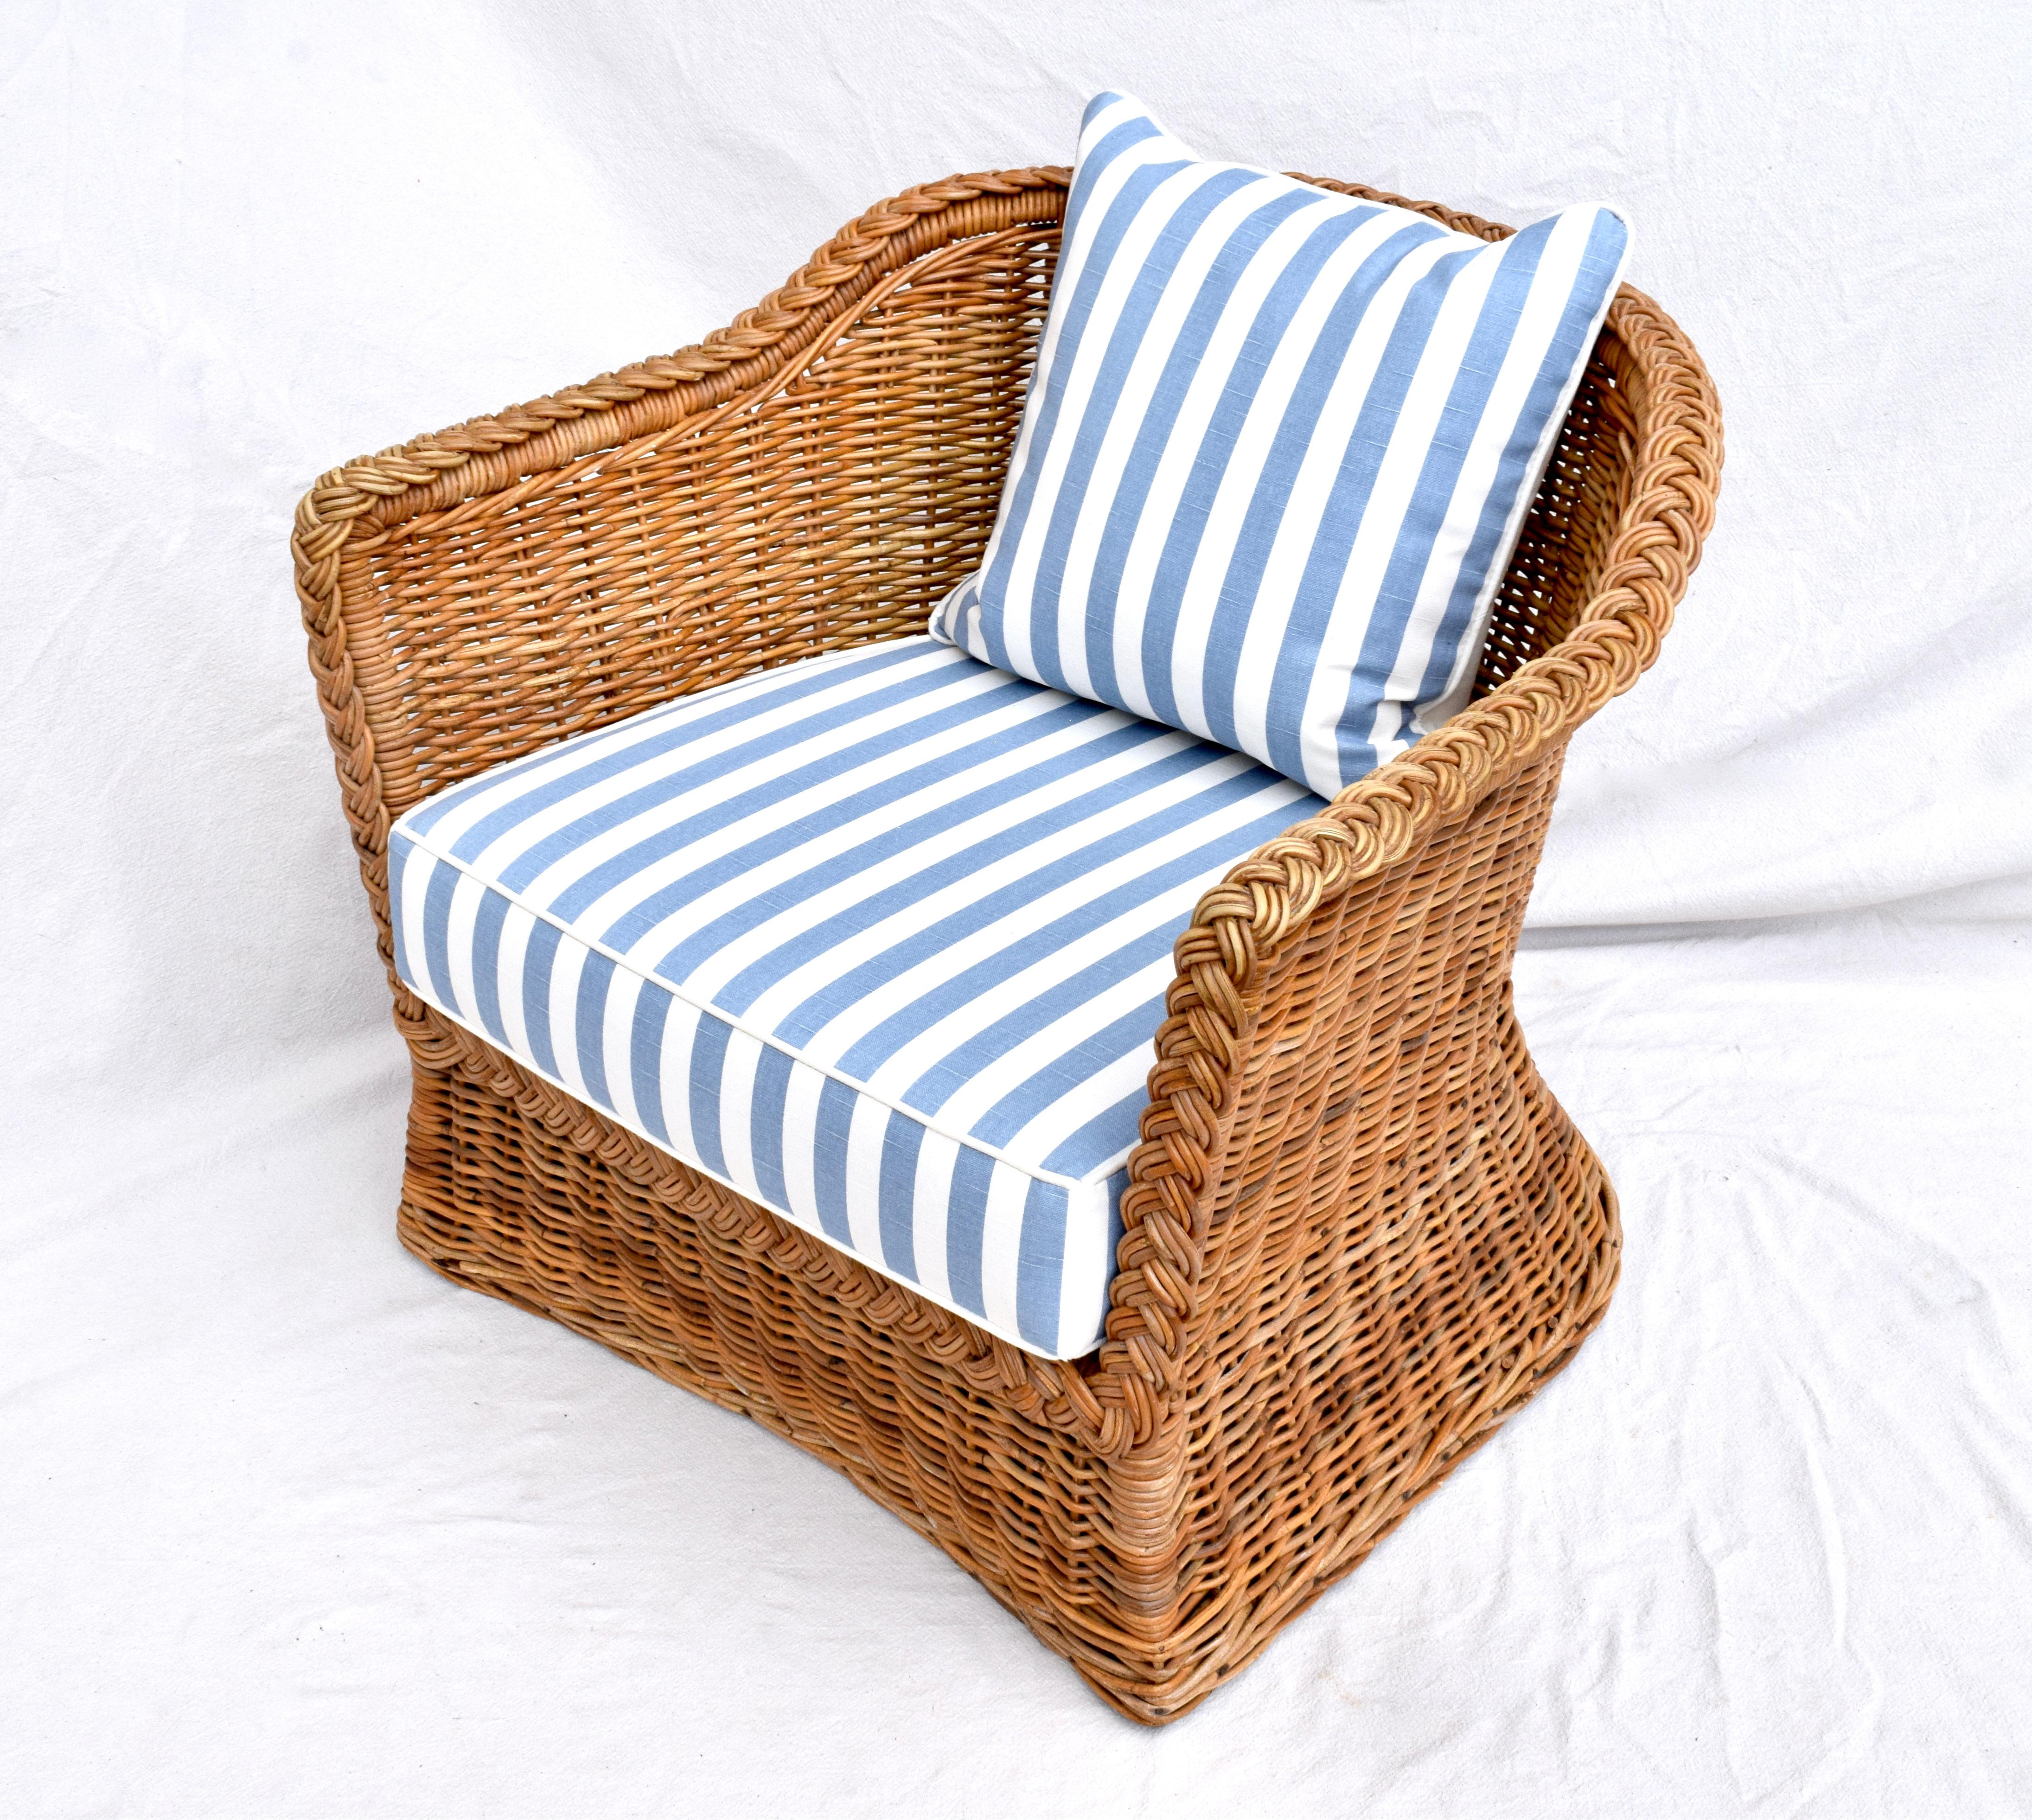 Wicker Works Braided Wicker Rattan Arm Chairs in Blue & White Linen 4